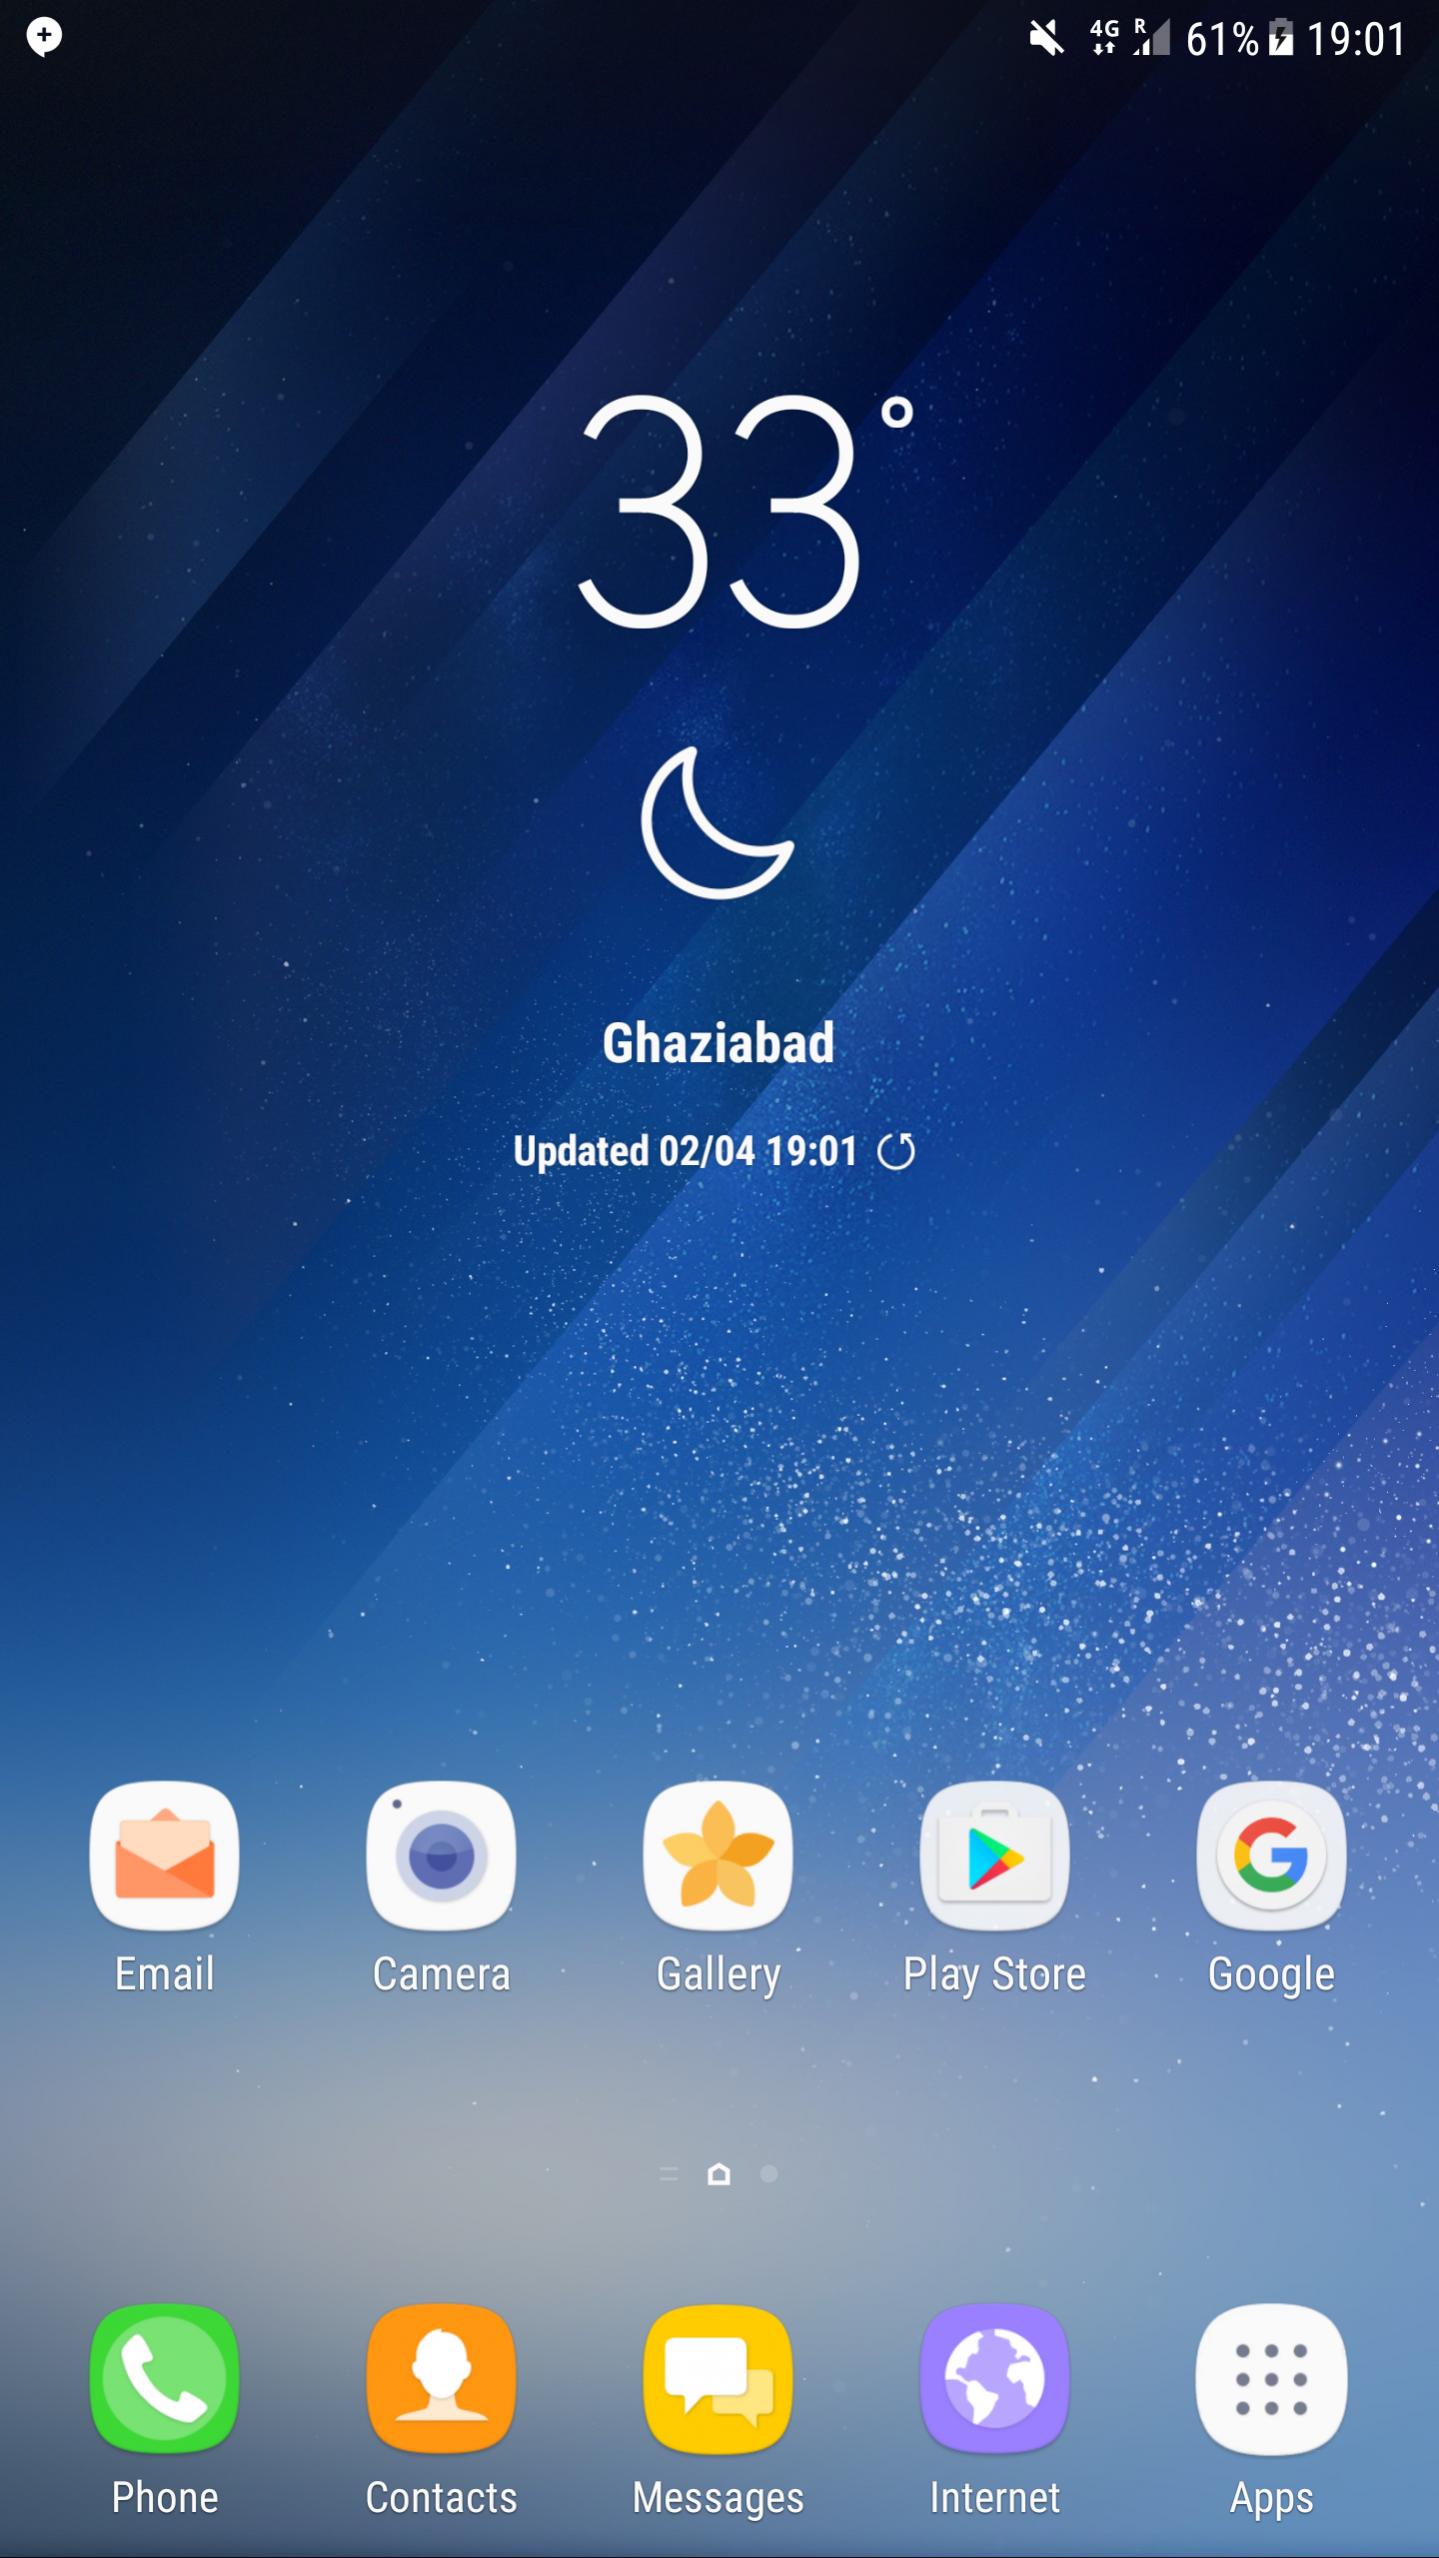 Download the Galaxy S8 weather app widget on your Galaxy S7 - Grab the Samsung Galaxy S8 weather app widget for your Galaxy S7